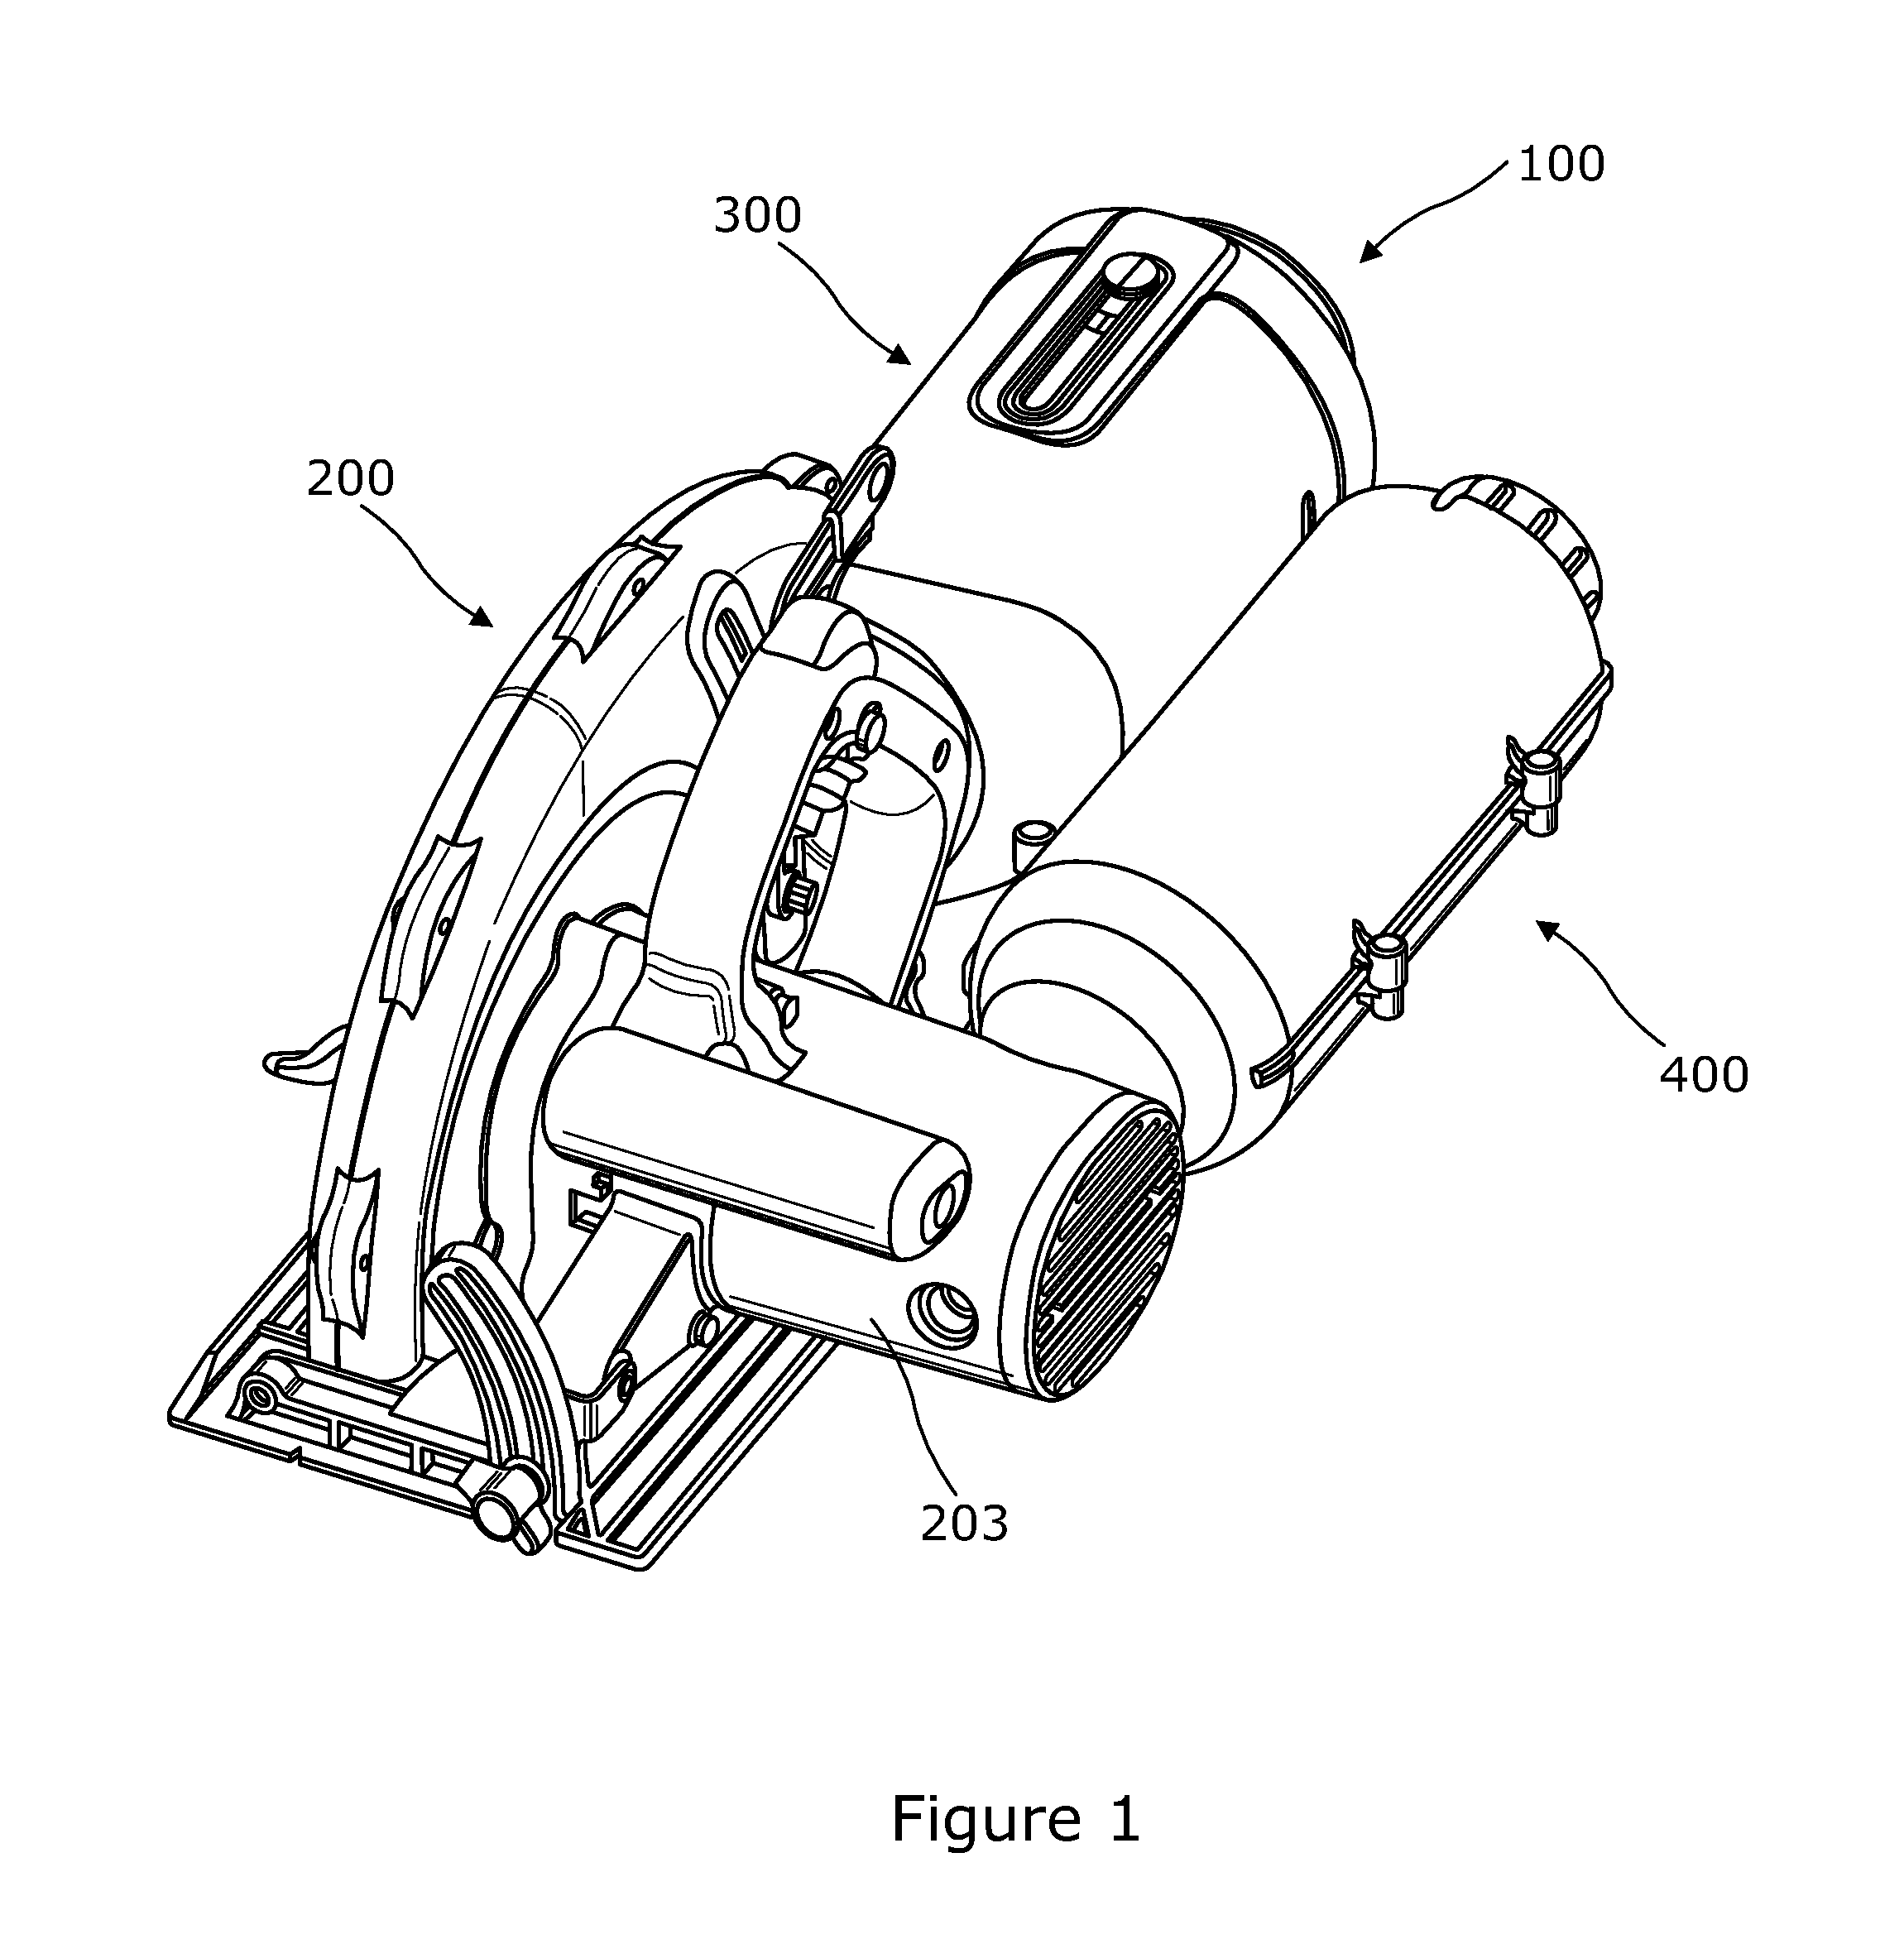 A cutting apparatus